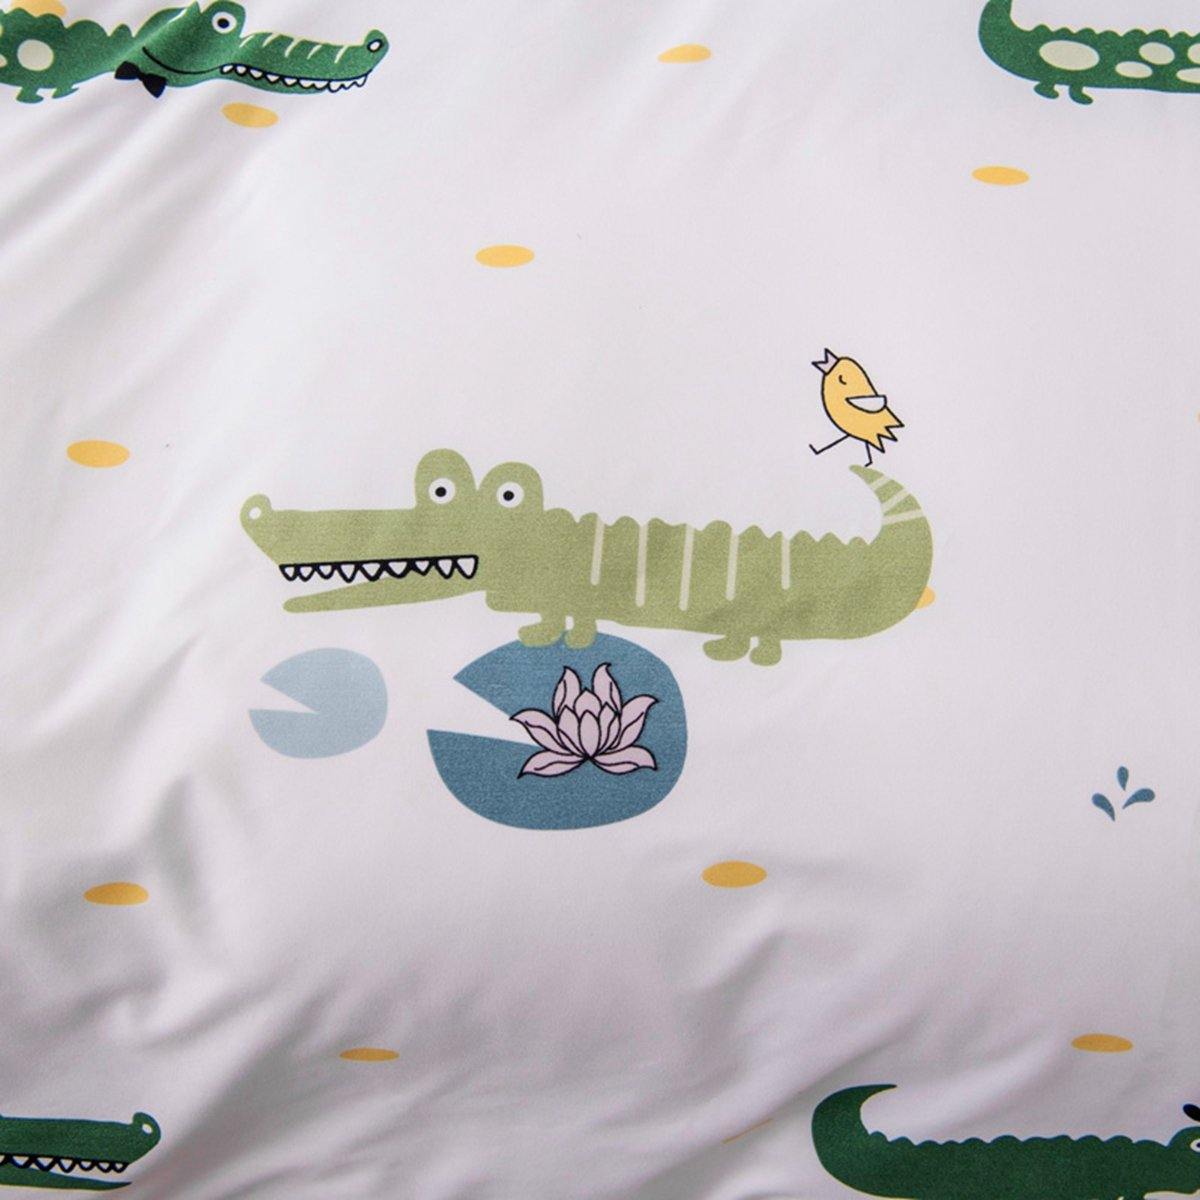 WONGS BEDDING Baby Crocodile Duvet Cover Set - Wongs bedding